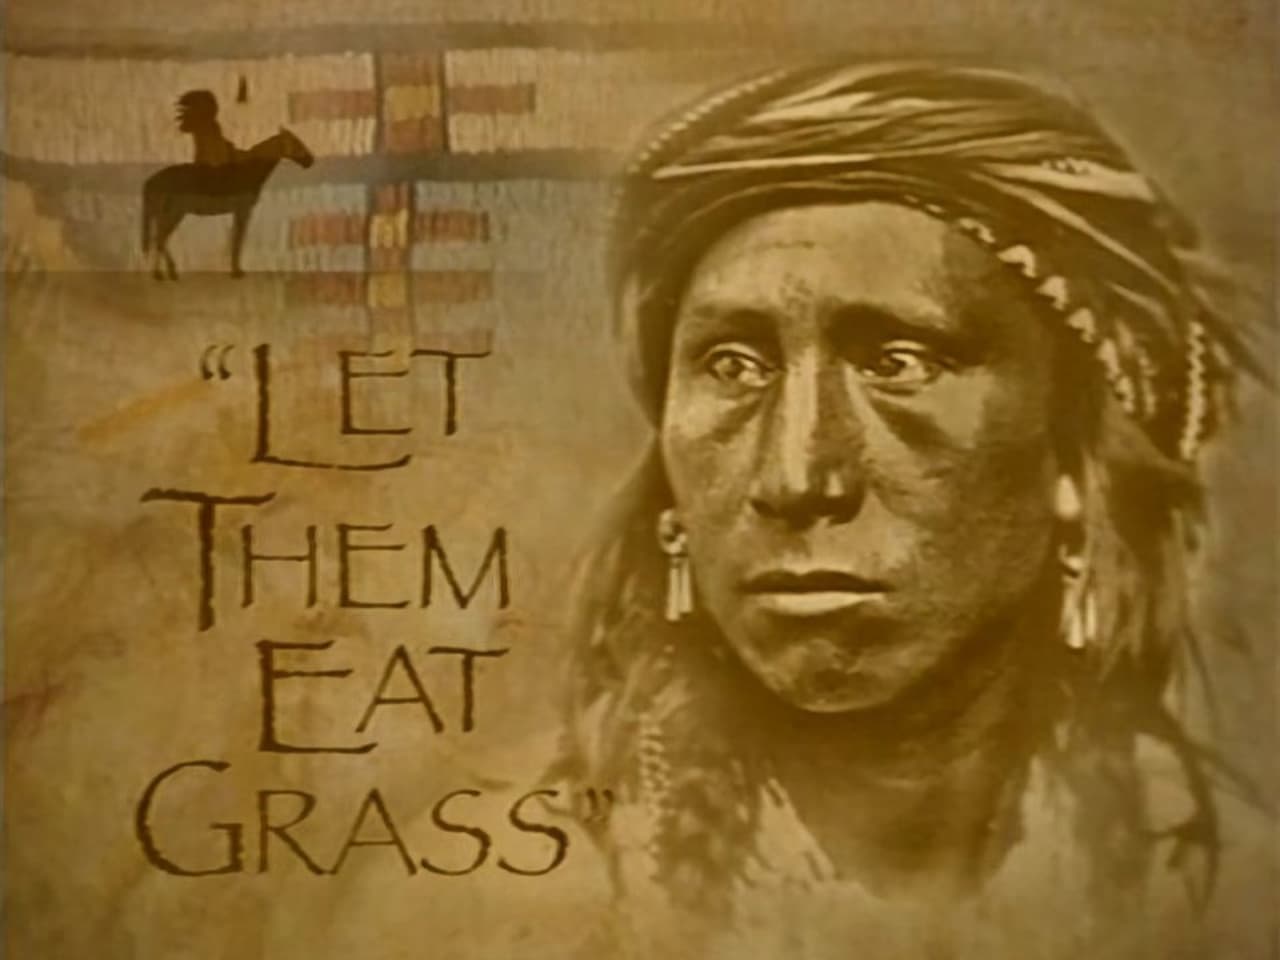 Let them Eat Grass